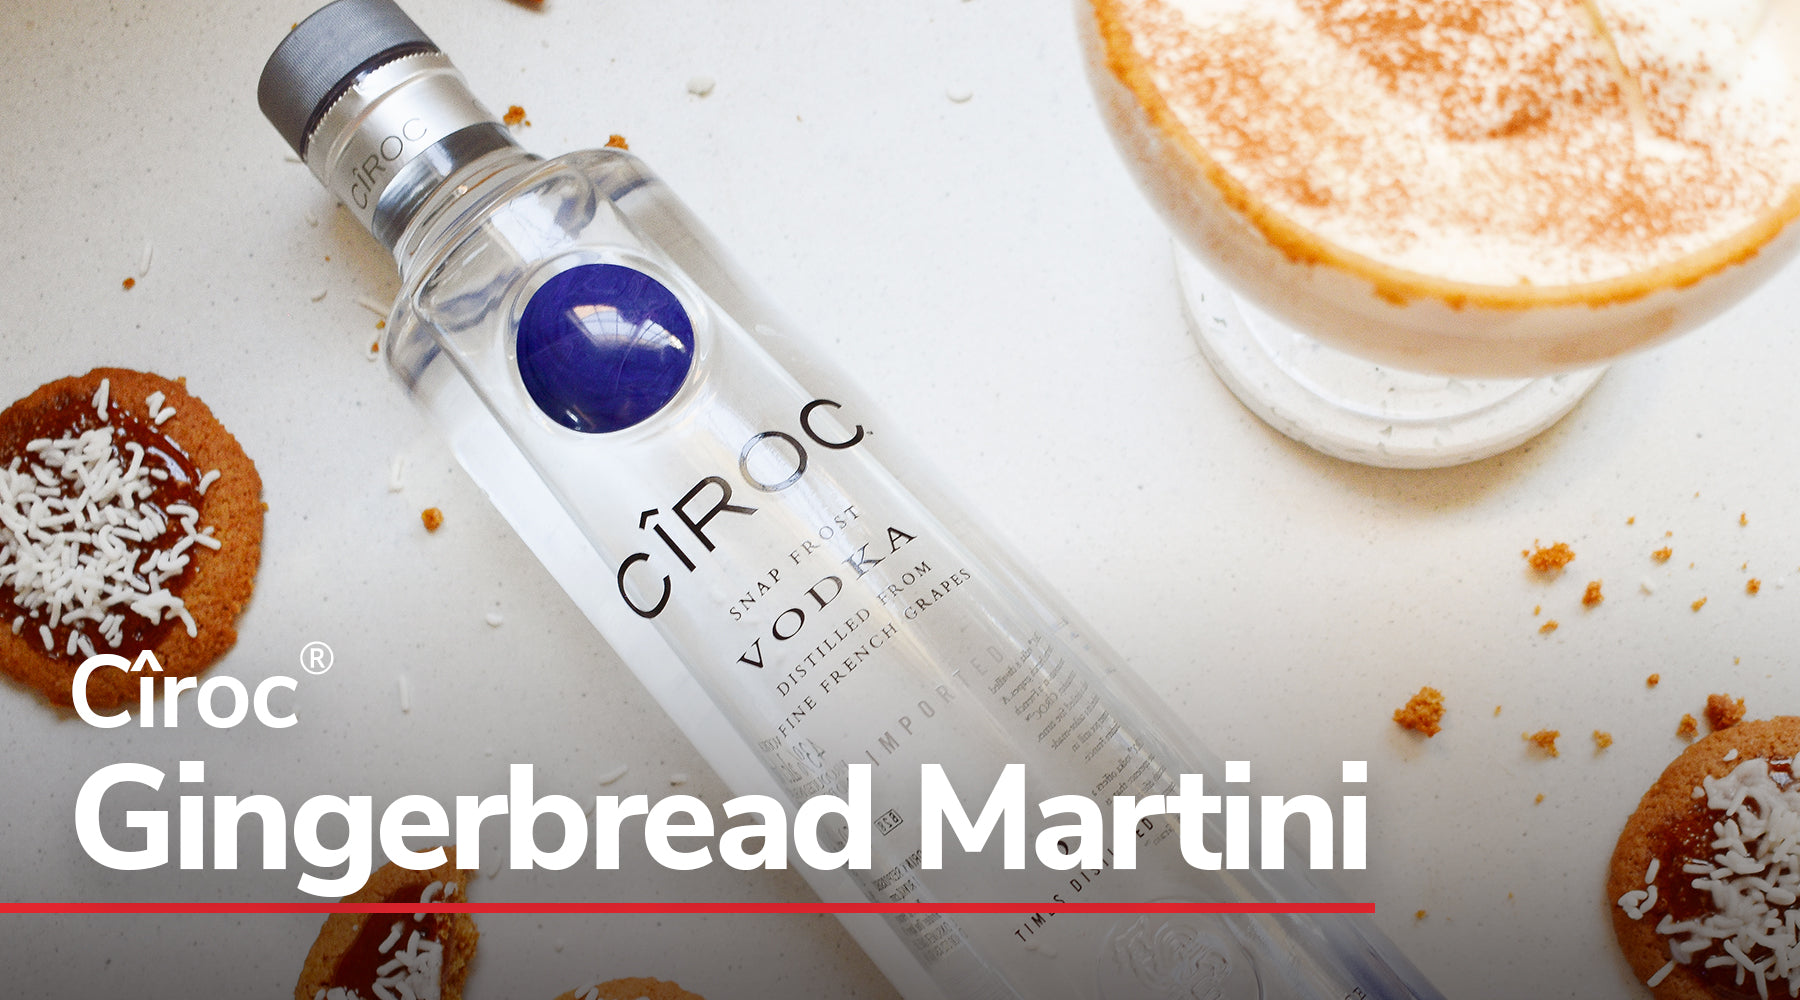 Gingerbread Martini with Cîroc